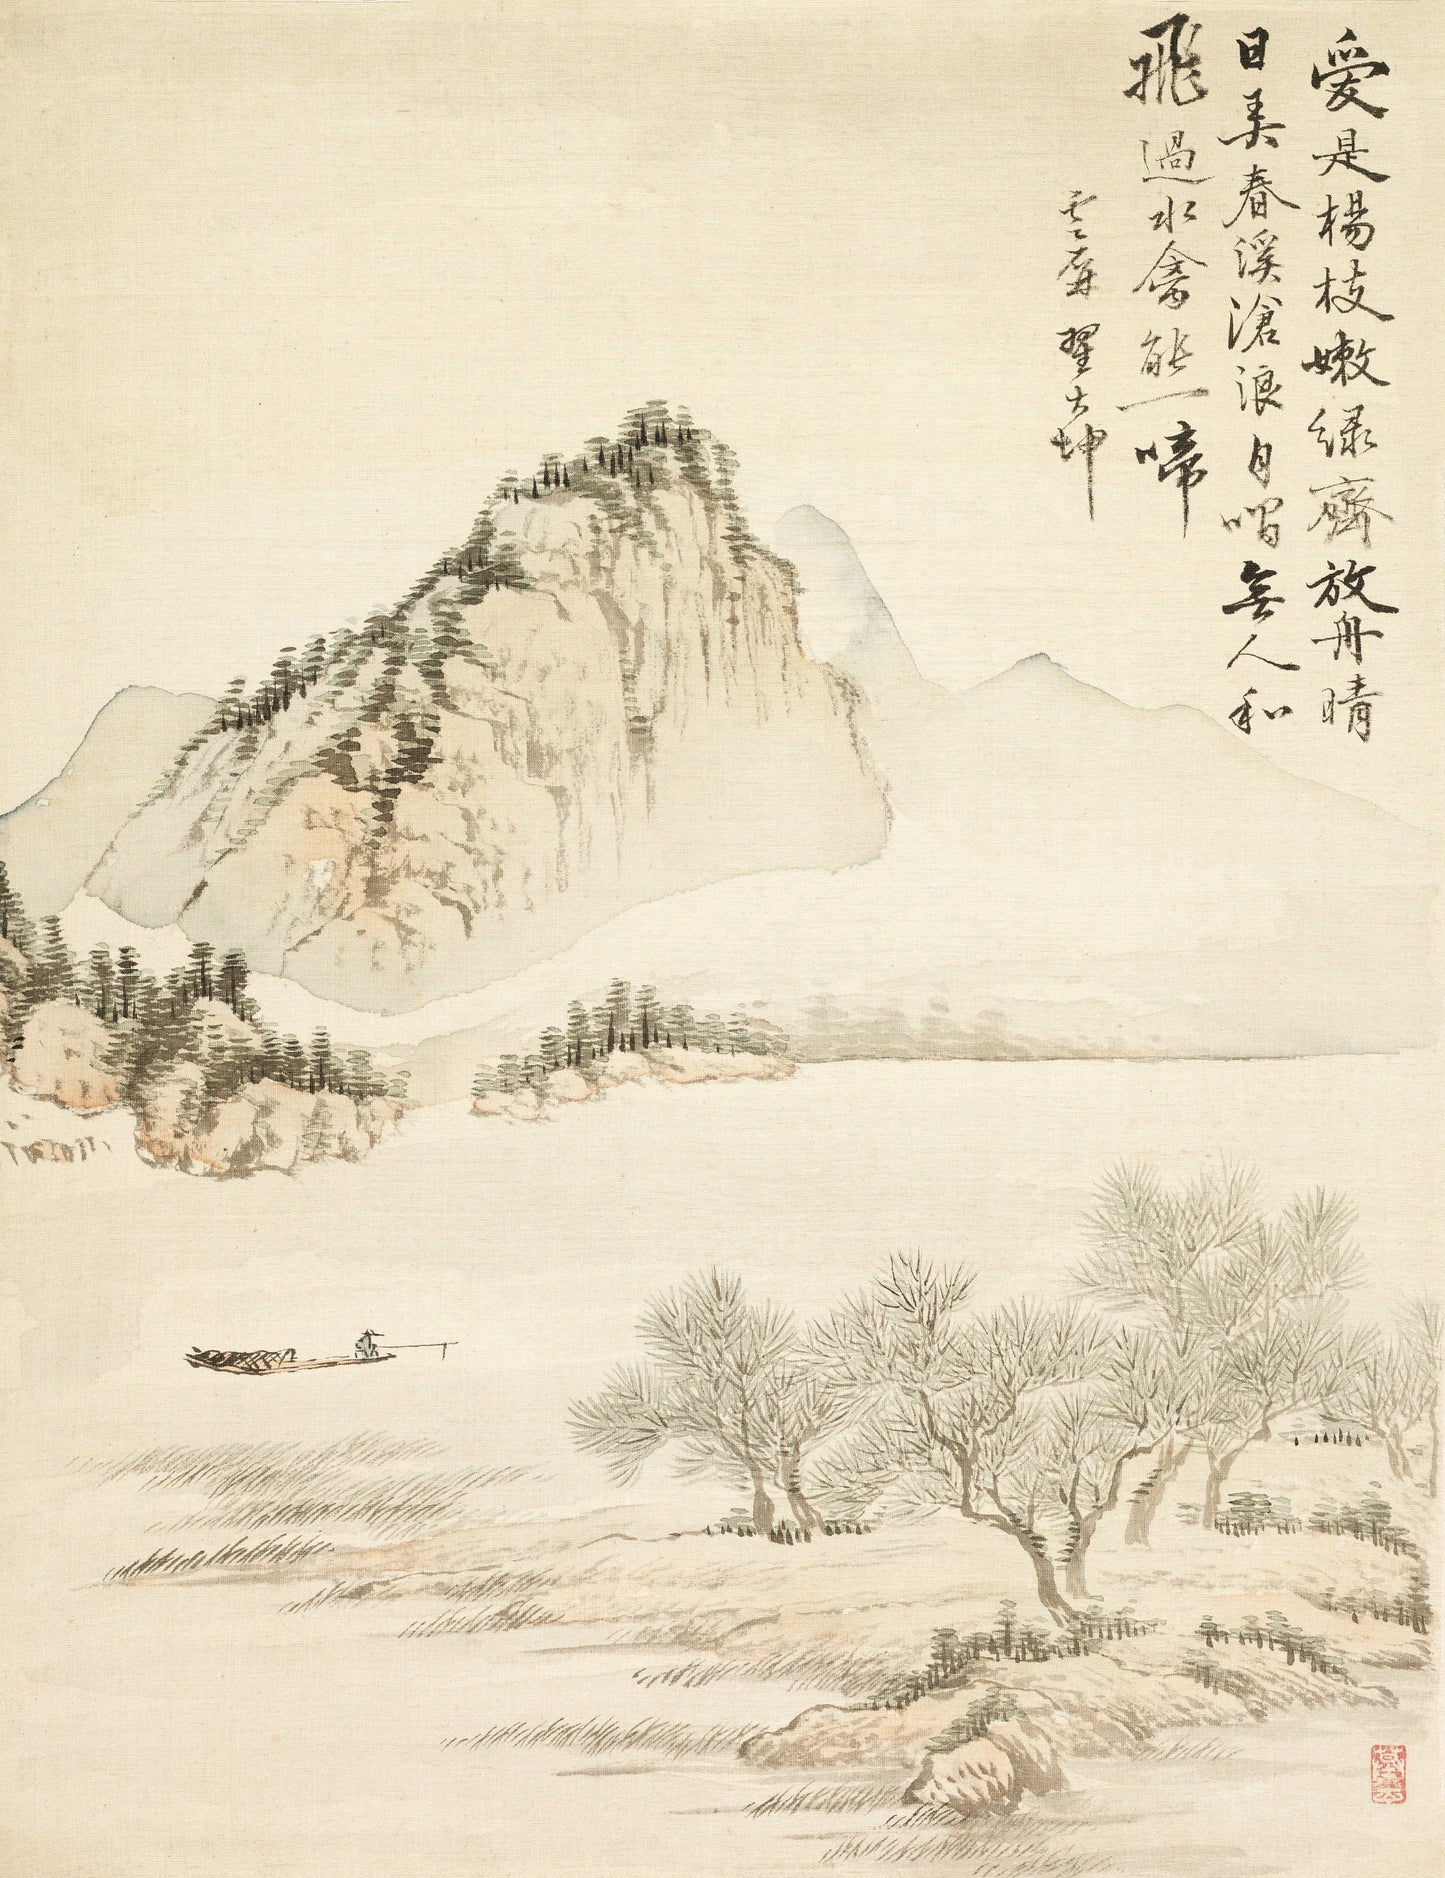 Tsubaki Chinzan Landscape Paintings [9 Images]